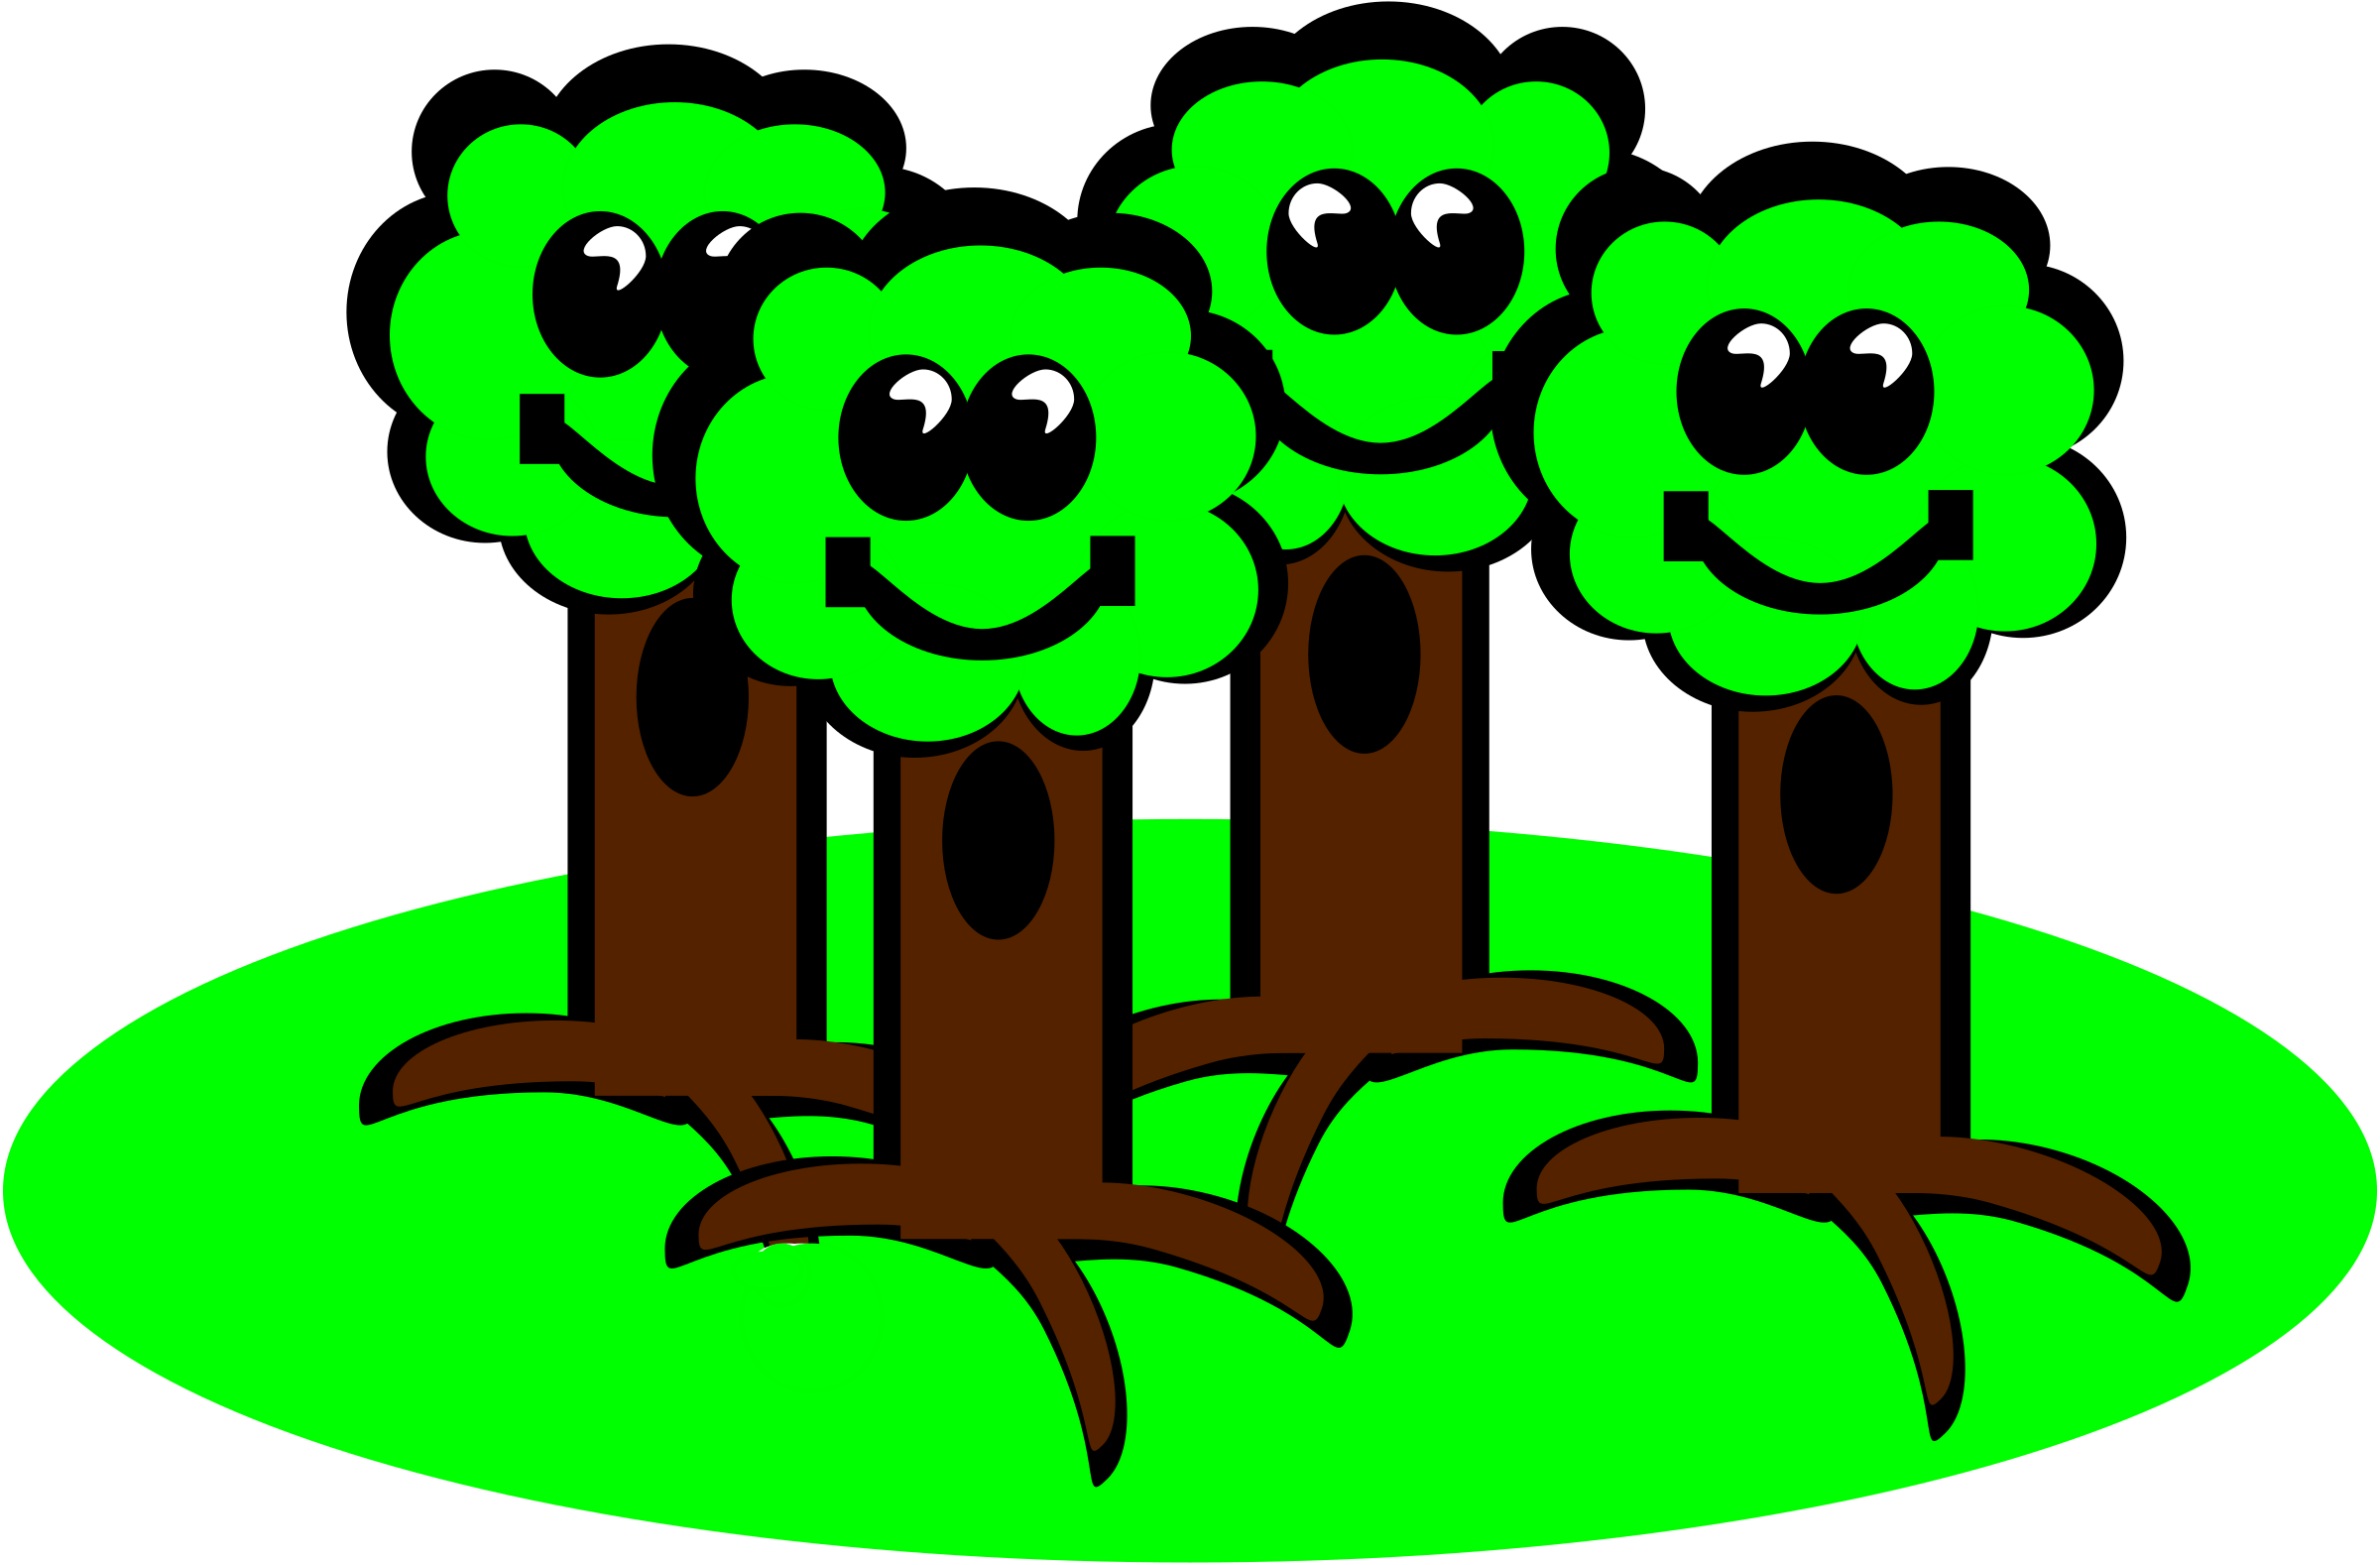 Tree clipart smile - ClipartFox